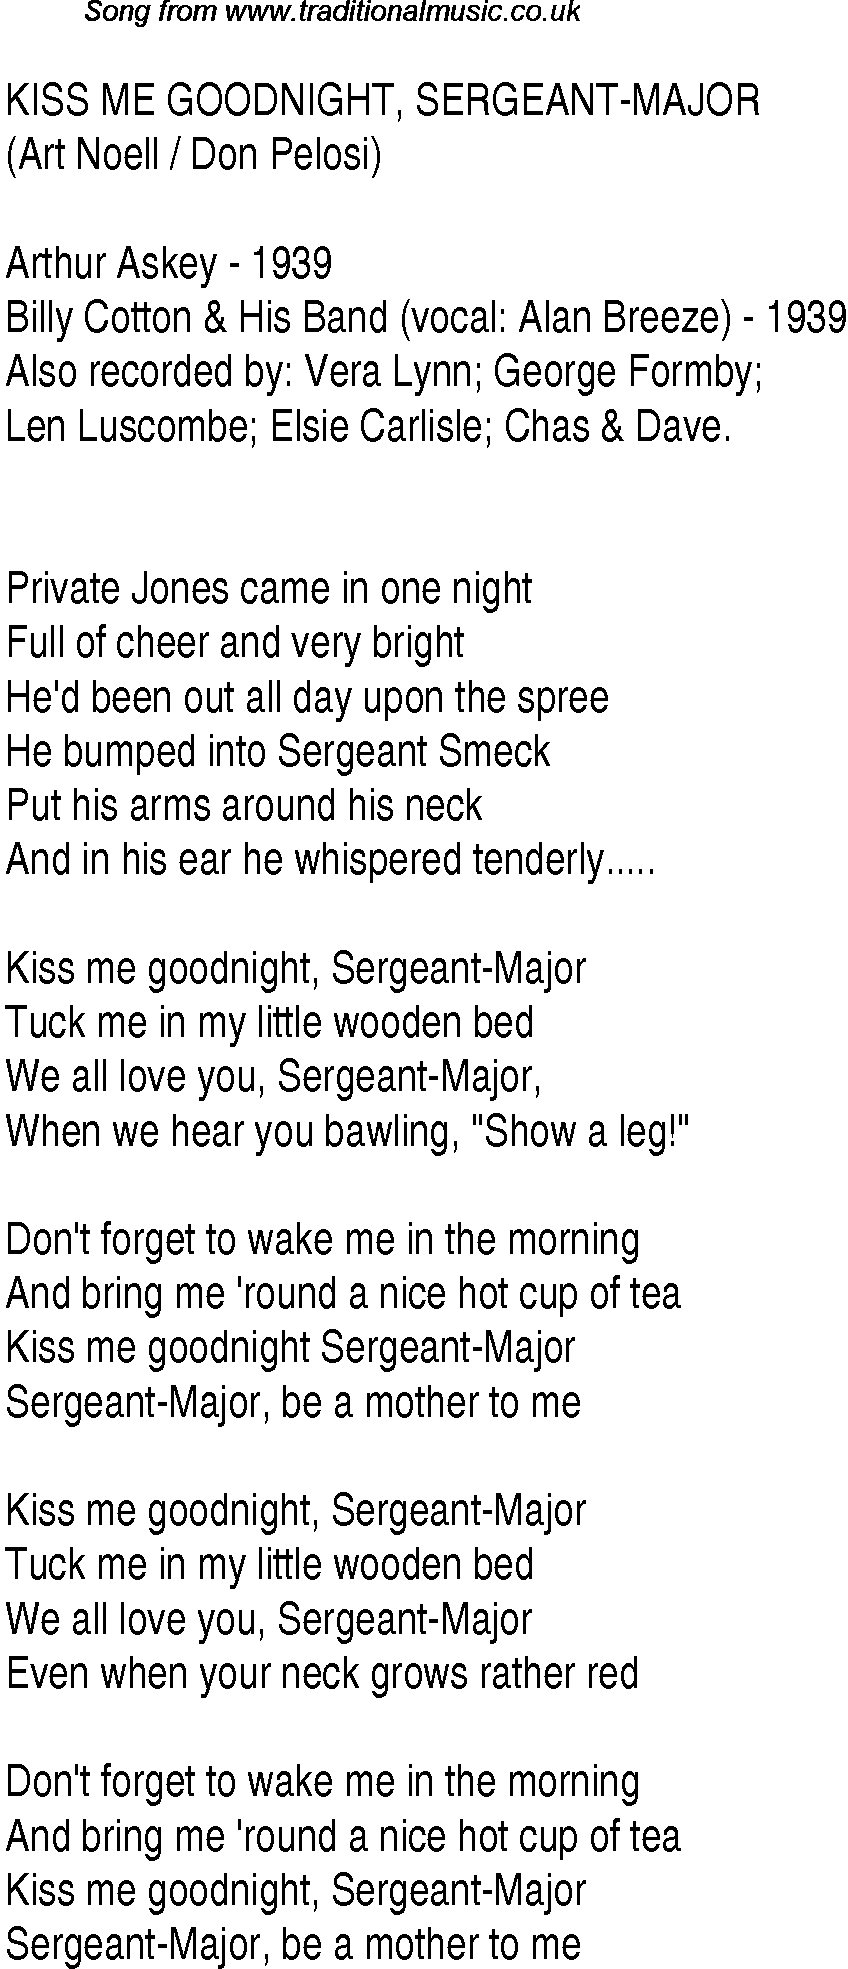 1940s top songs - lyrics for Kiss Me Goodnight, Sergeant Major